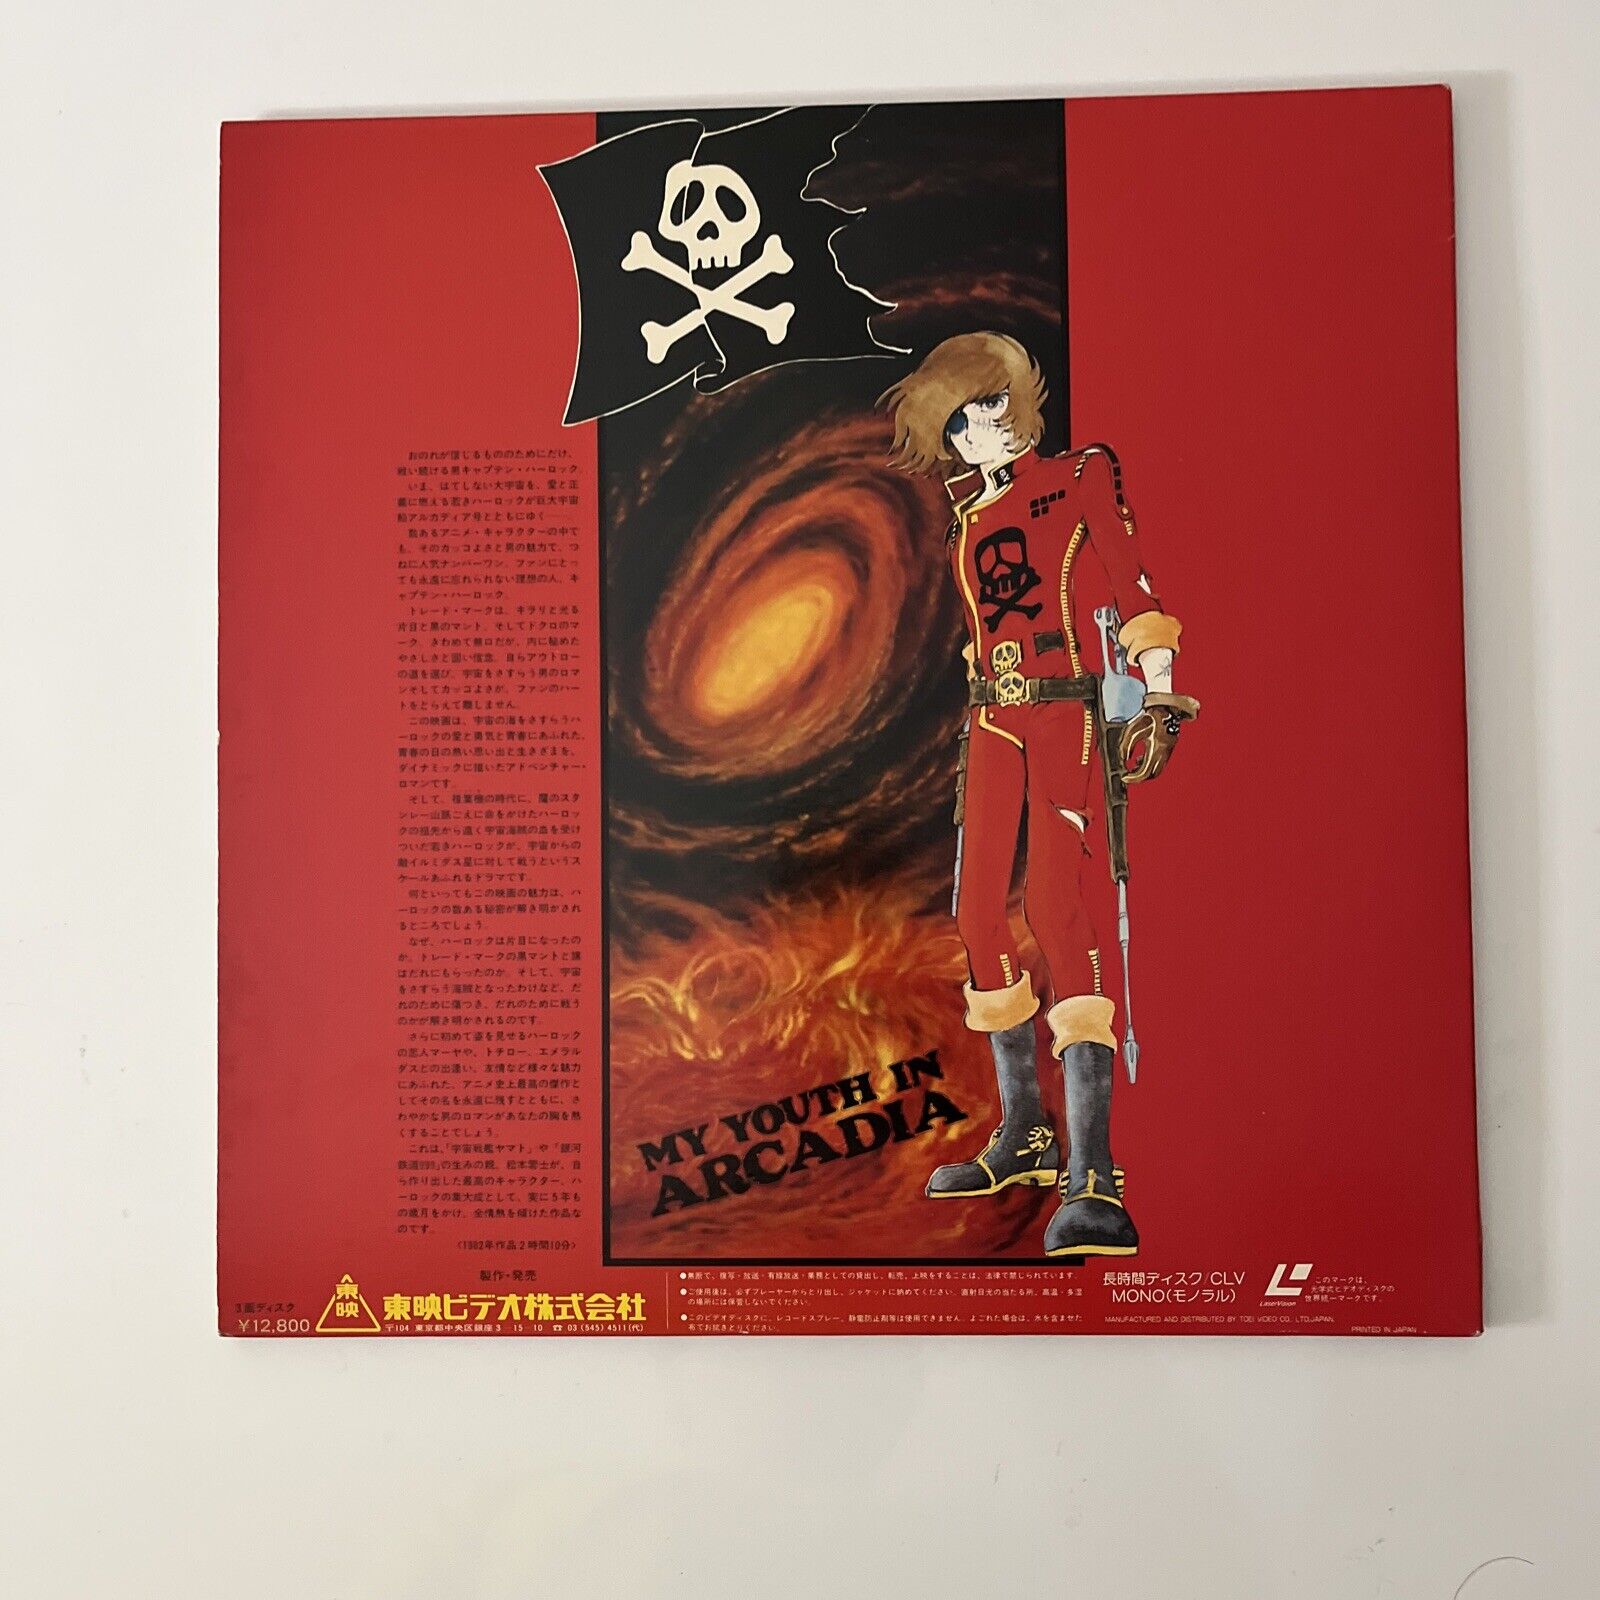 Kyōshoku Sōkō Guyver VHS and LaserDisc Release Ad